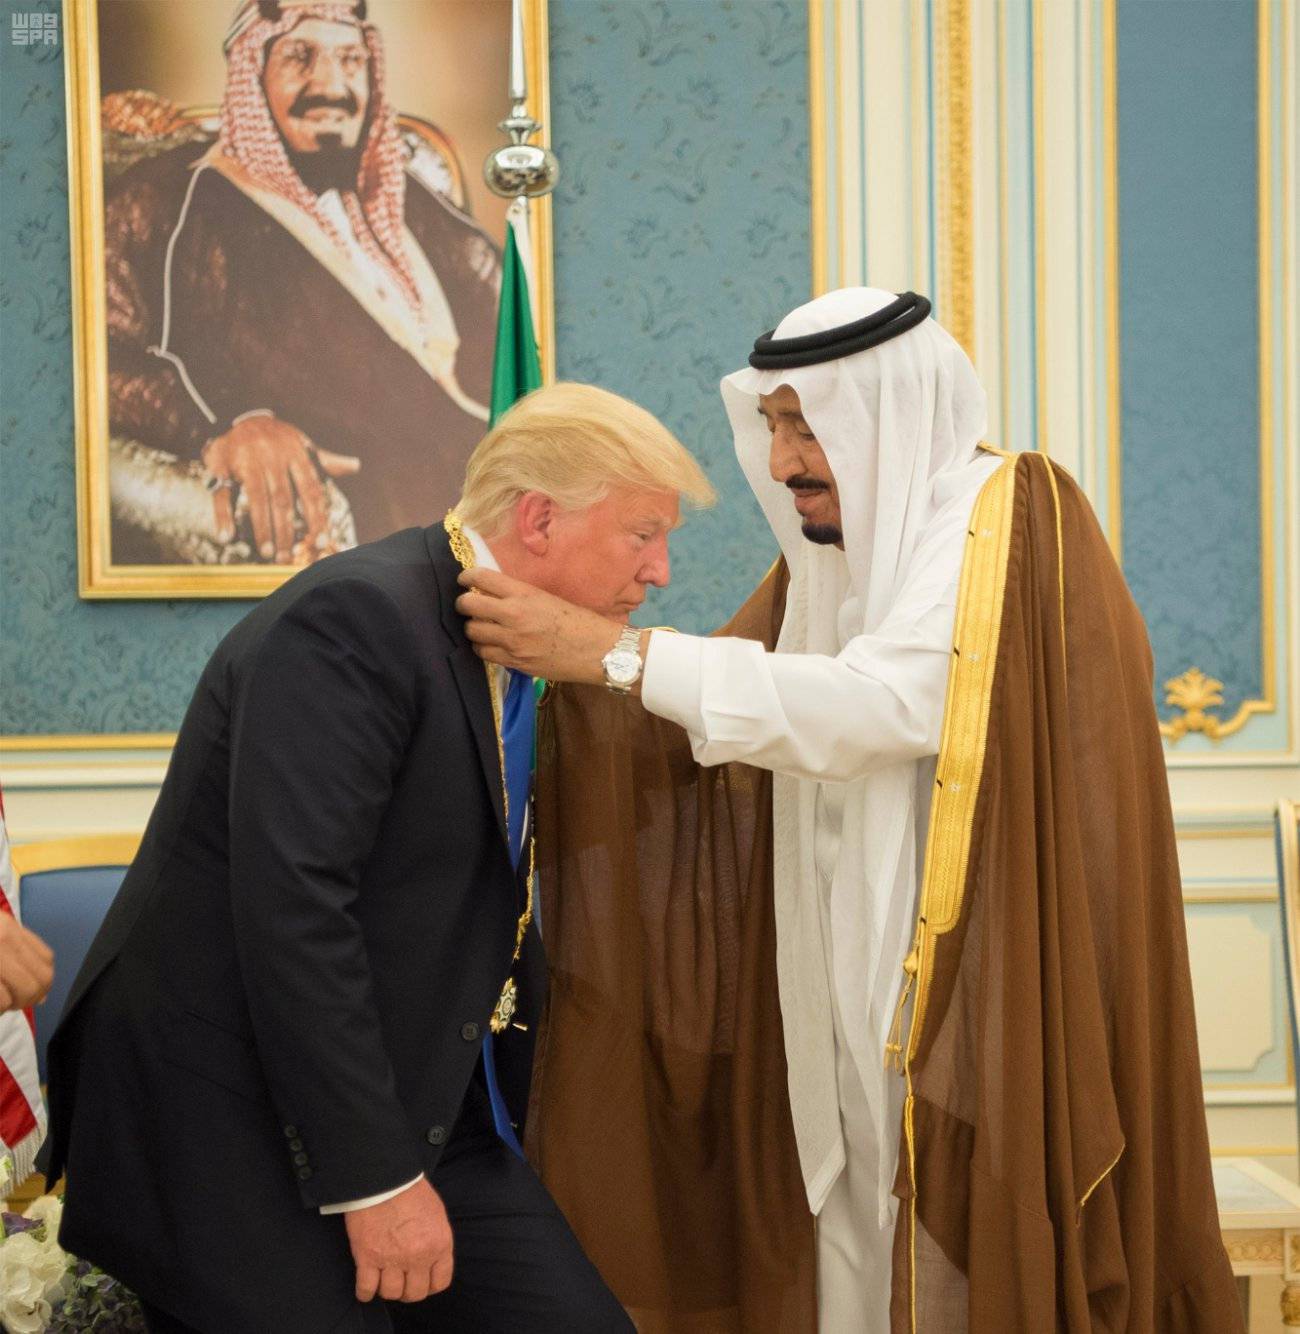 Saudi Arabia's King Salman bin Abdulaziz Al Saud presents U.S. President Donald Trump with the Collar of Abdulaziz Al Saud Medal at the Royal Court in Riyadh